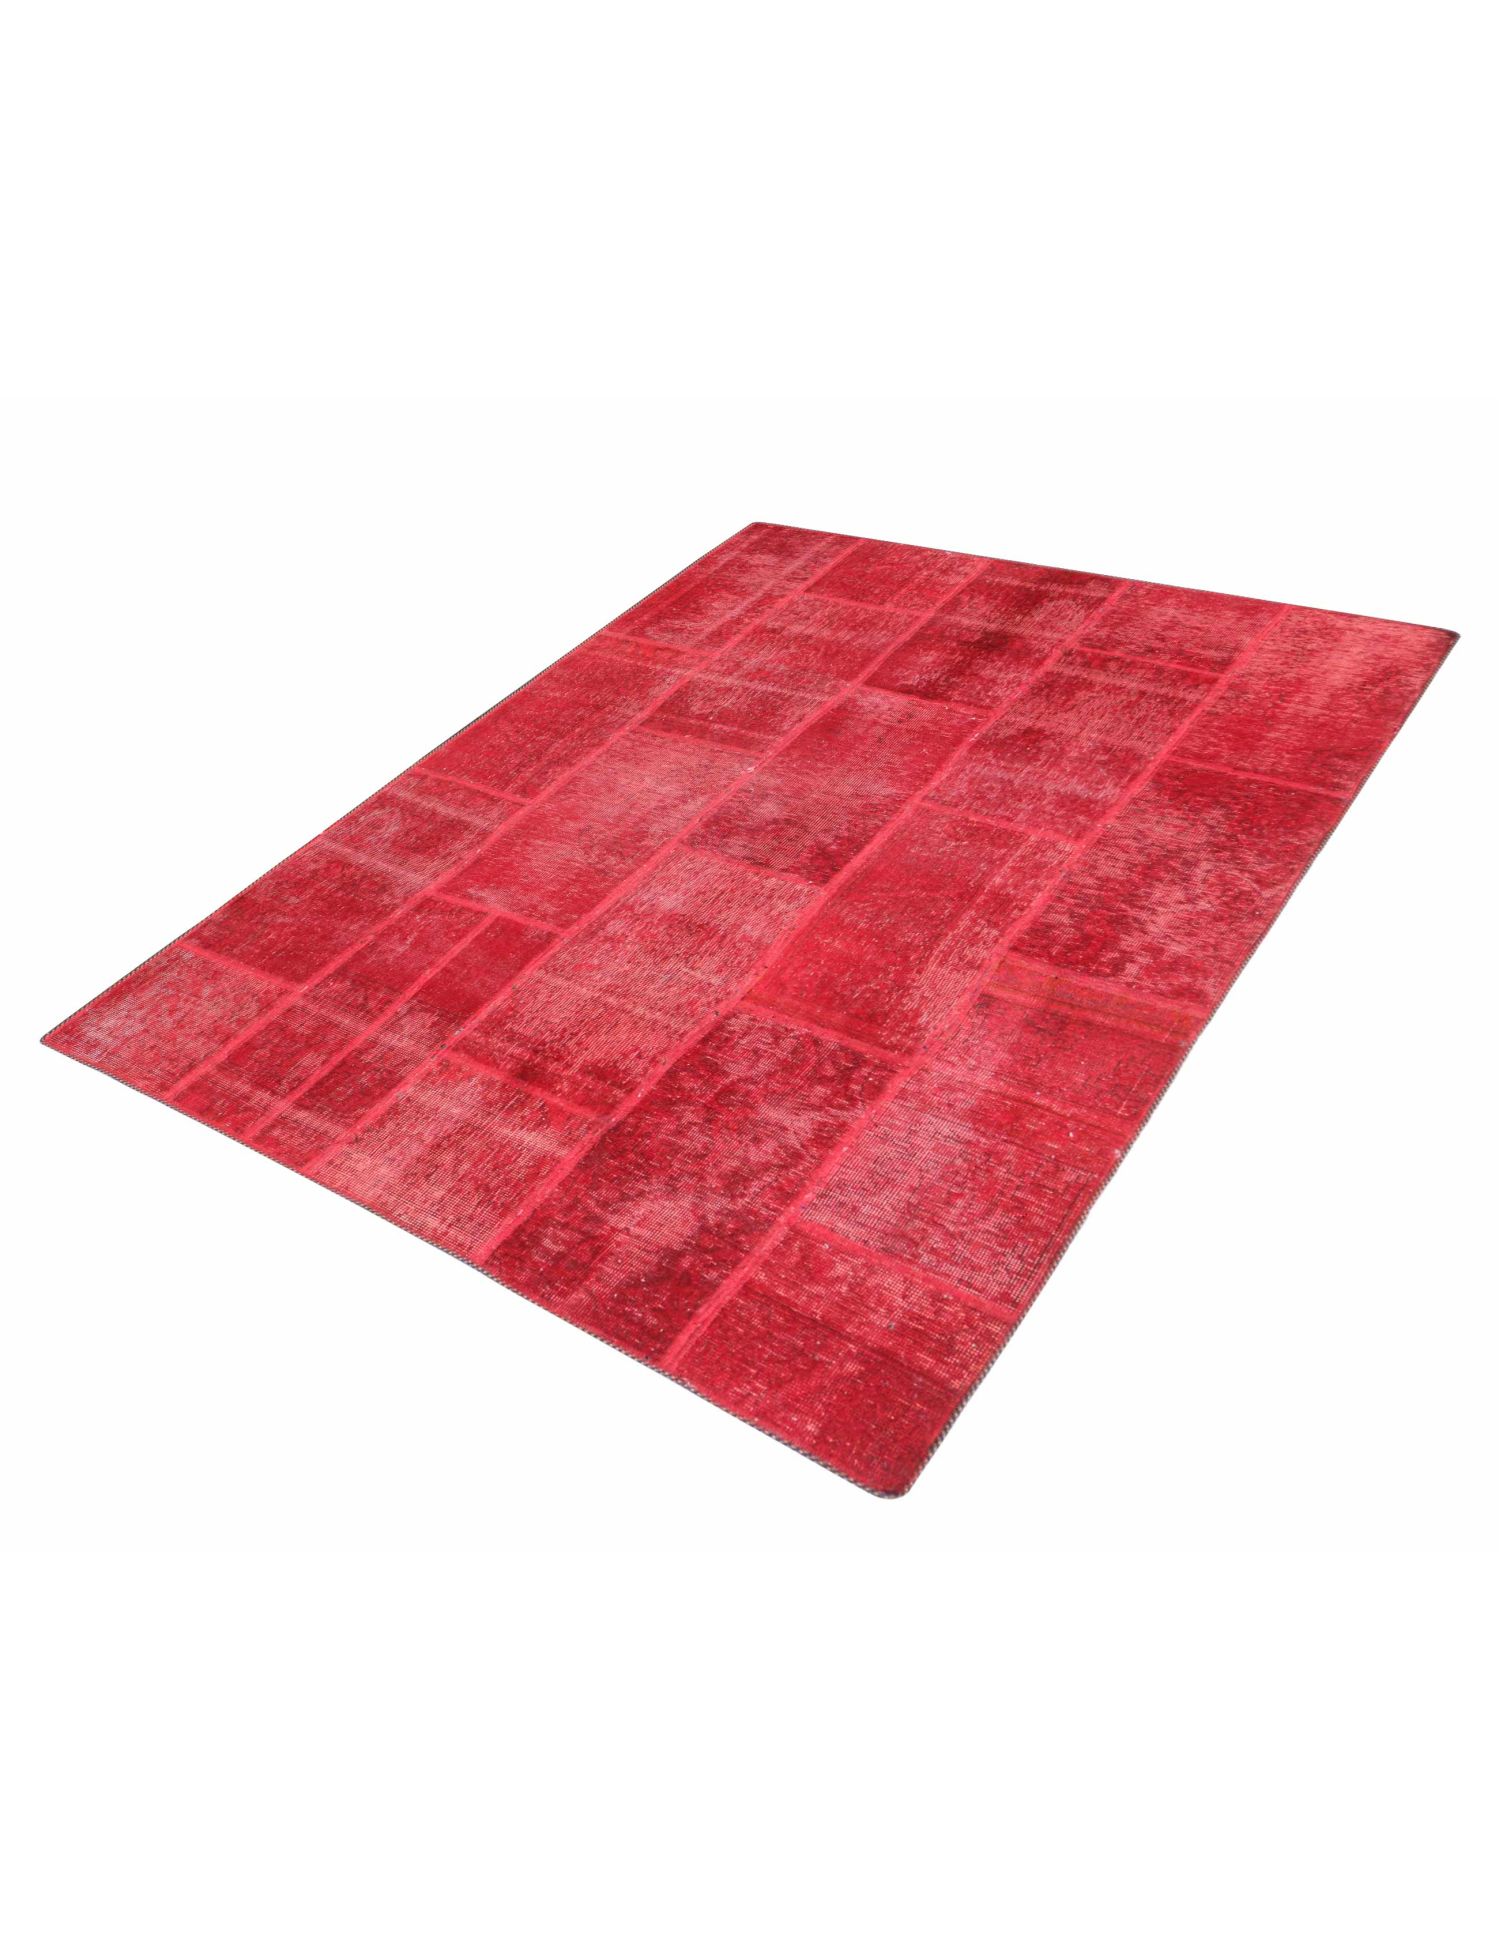 Patchwork Χαλί  Κόκκινο <br/>210 x 150 cm